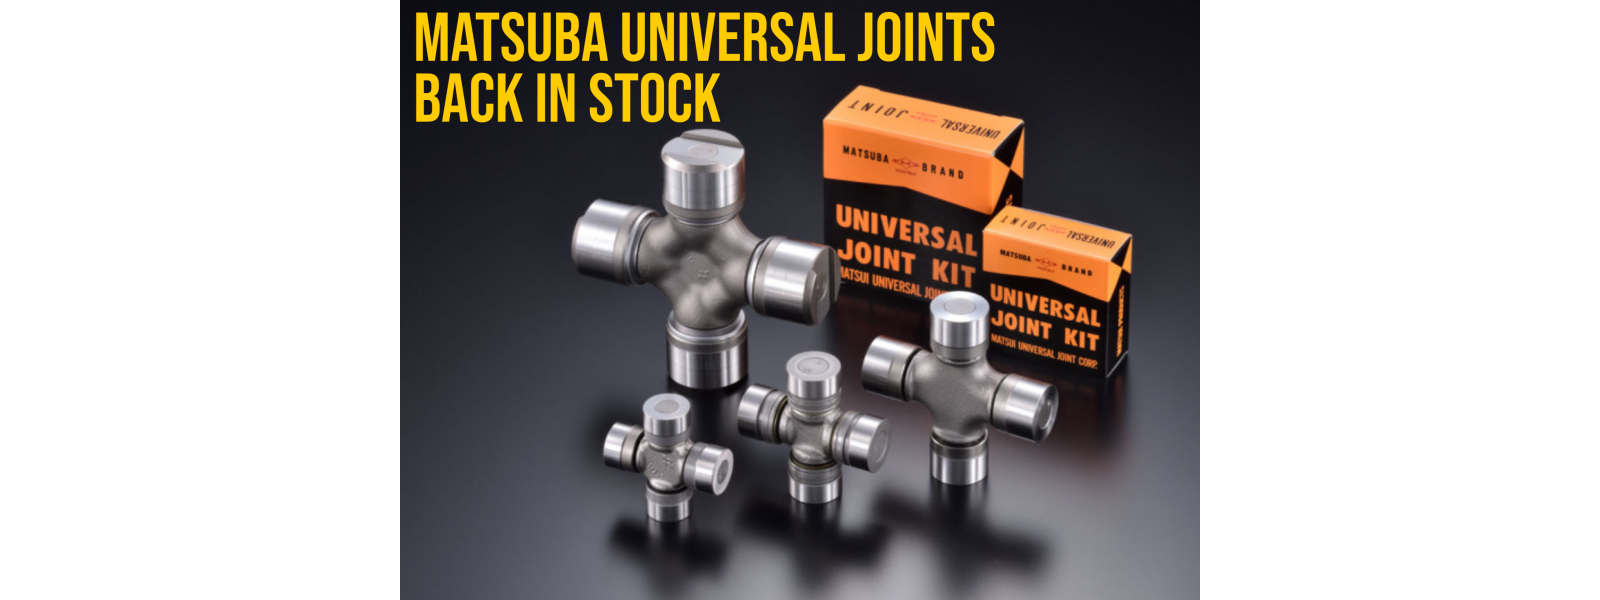 Matsuba Universal Joints